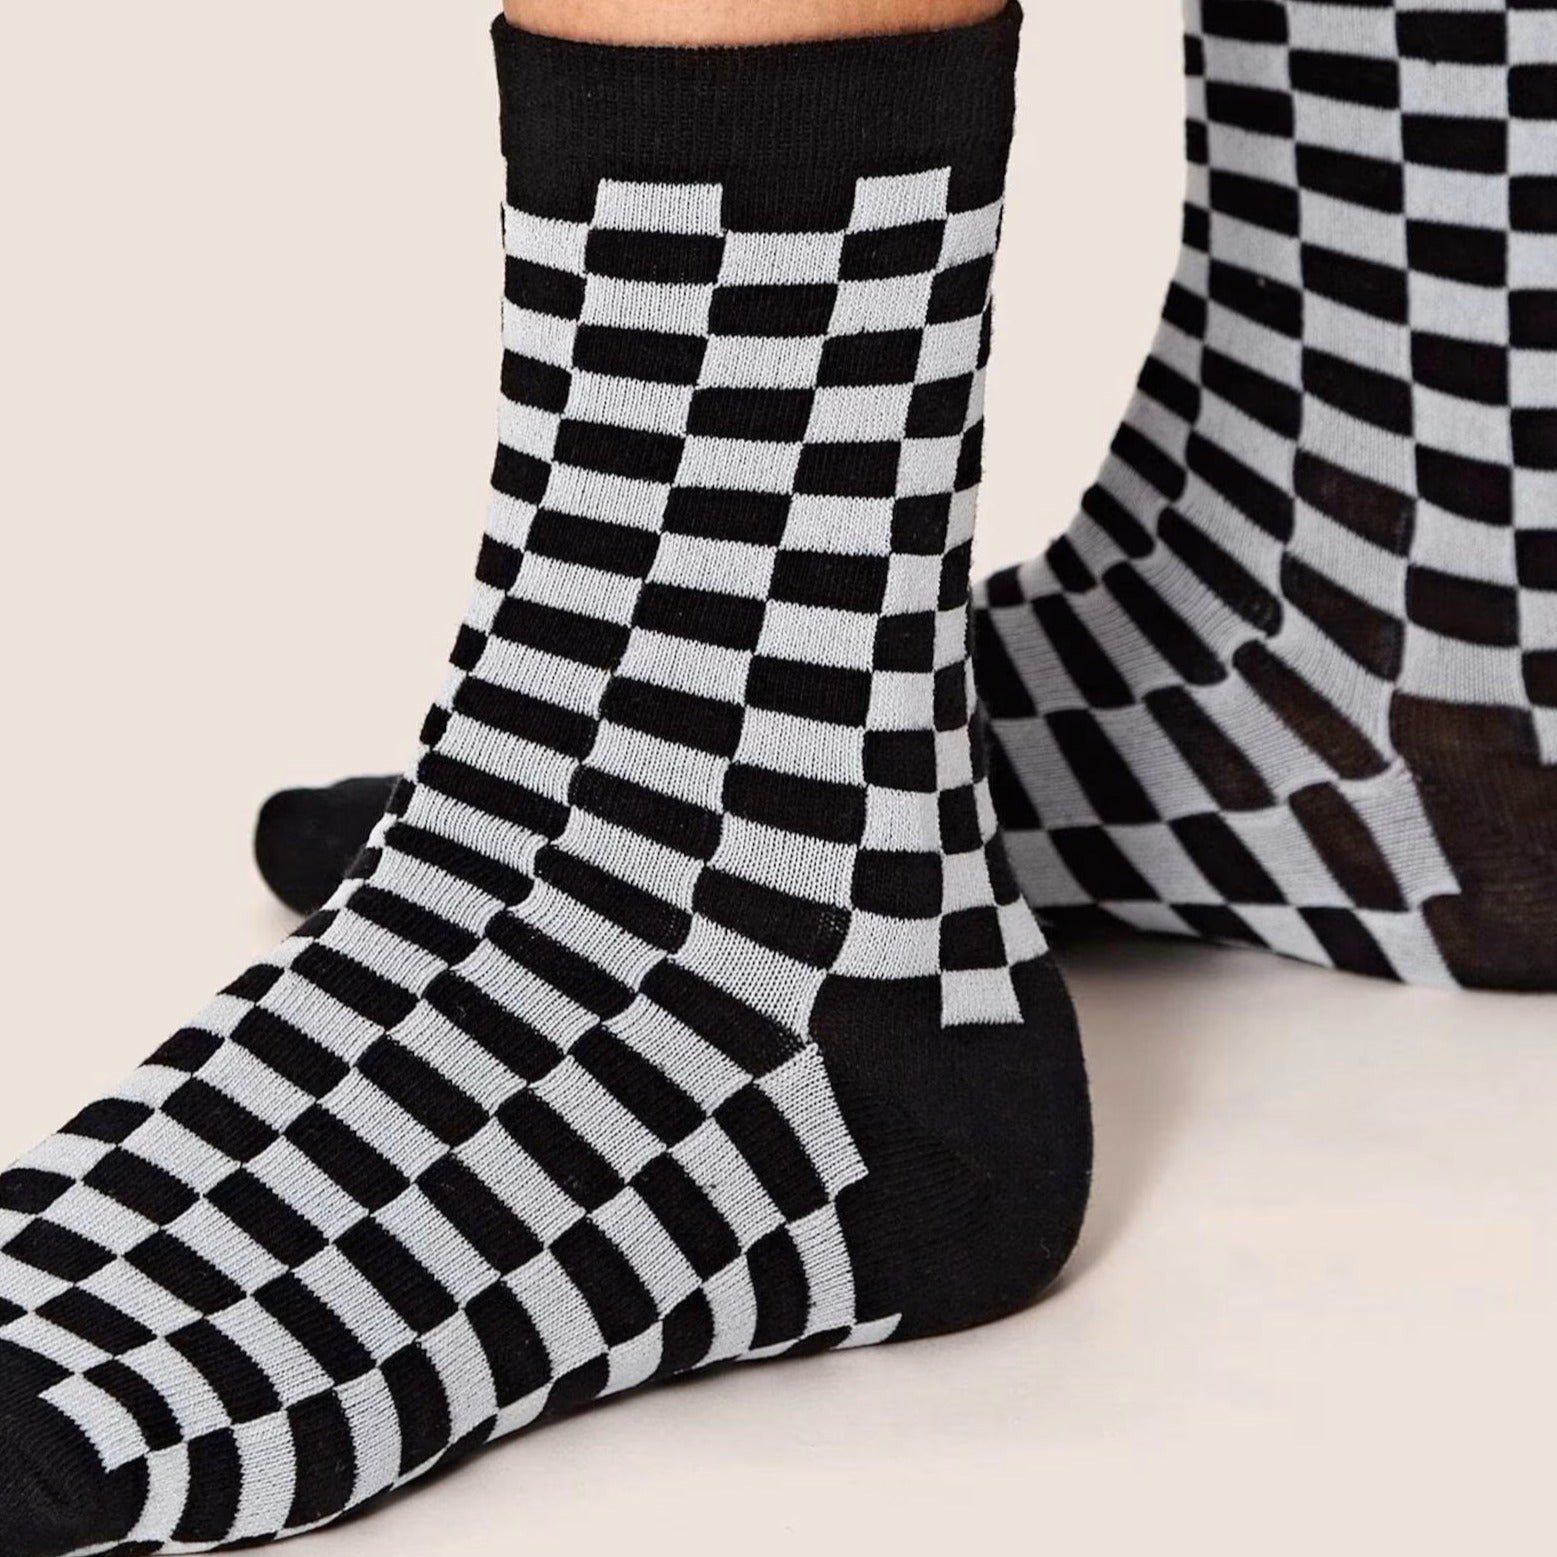 Black and Gray Checkered Socks from the Sock Panda (Adult Medium)